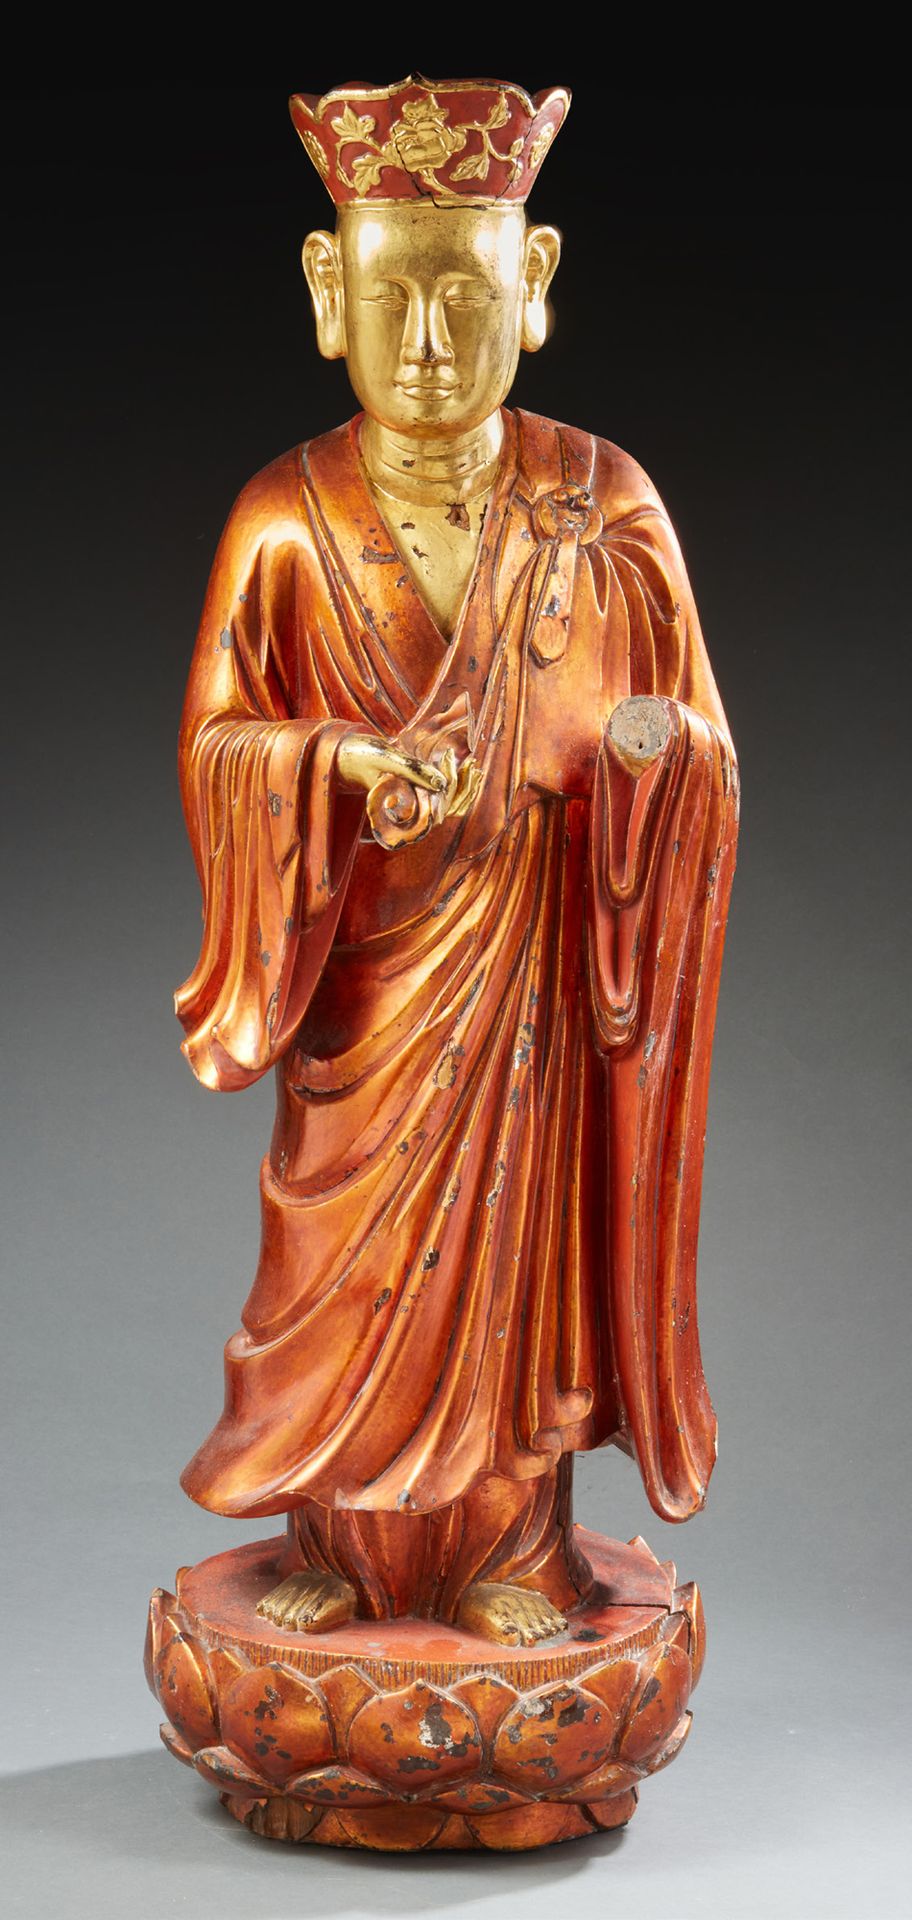 VIETNAM 大型木雕僧人像，袈裟有多处褶皱，头饰有花卉图案 19世纪下半叶（缺一只手，有缺口和裂纹） 高：102厘米